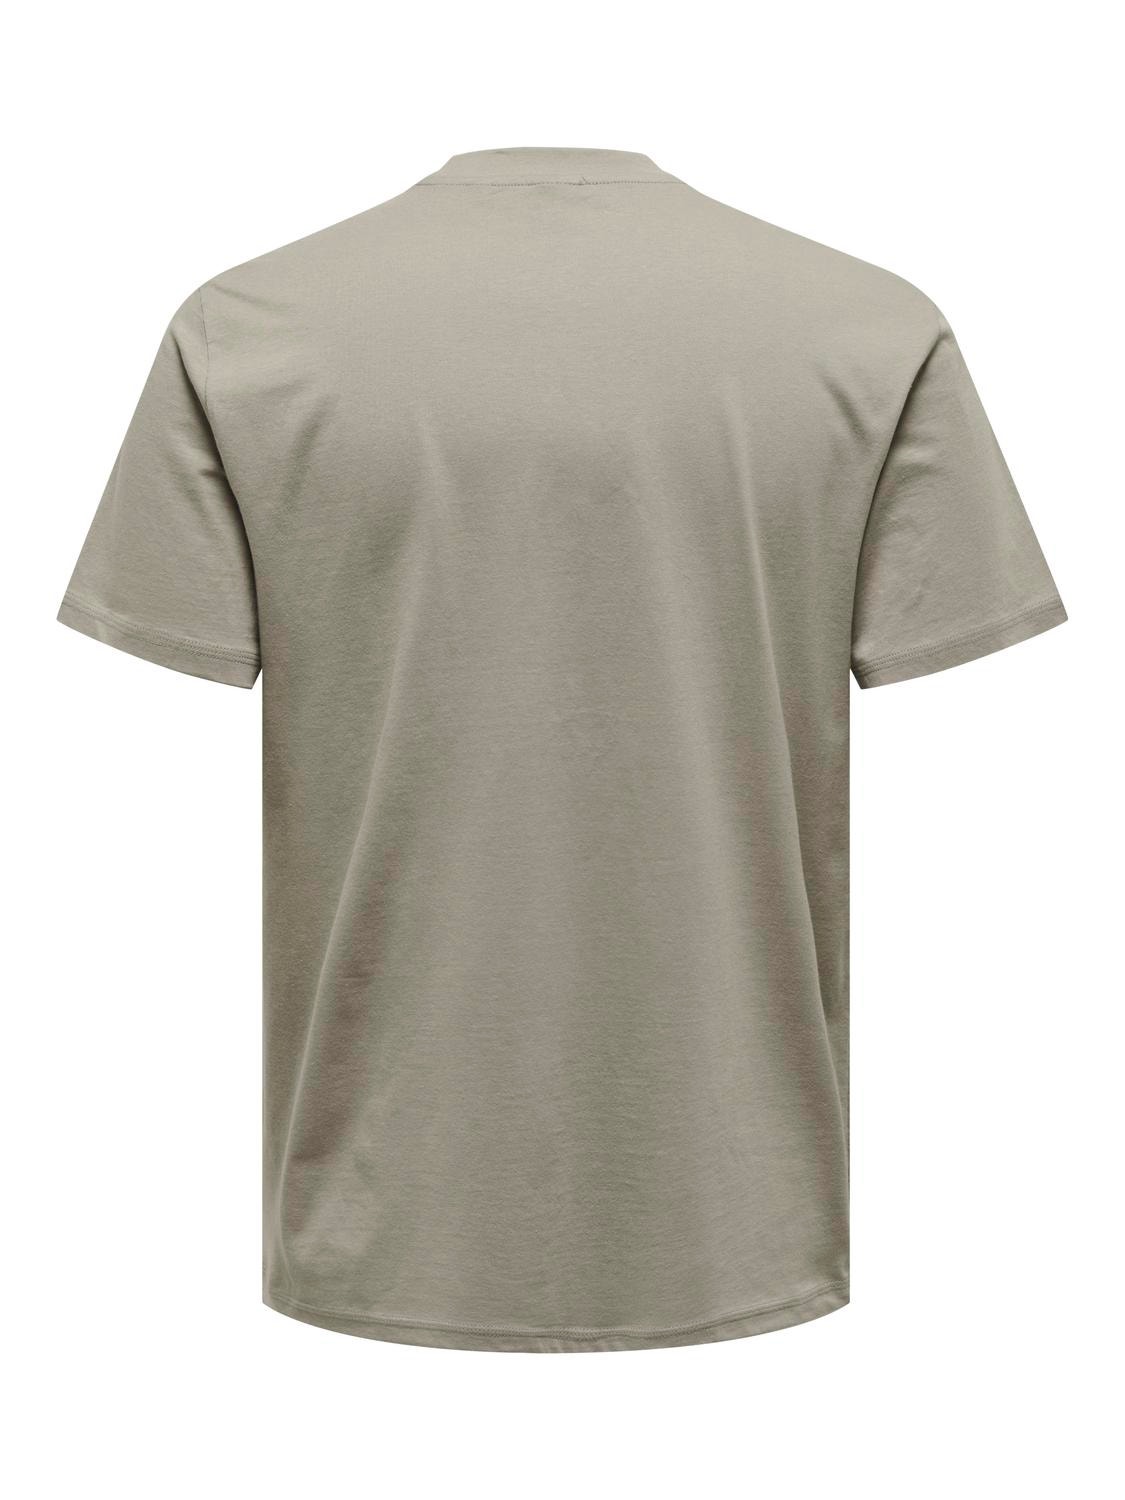 ONLY & SONS O-neck t-shirt -Vintage Khaki - 22027521